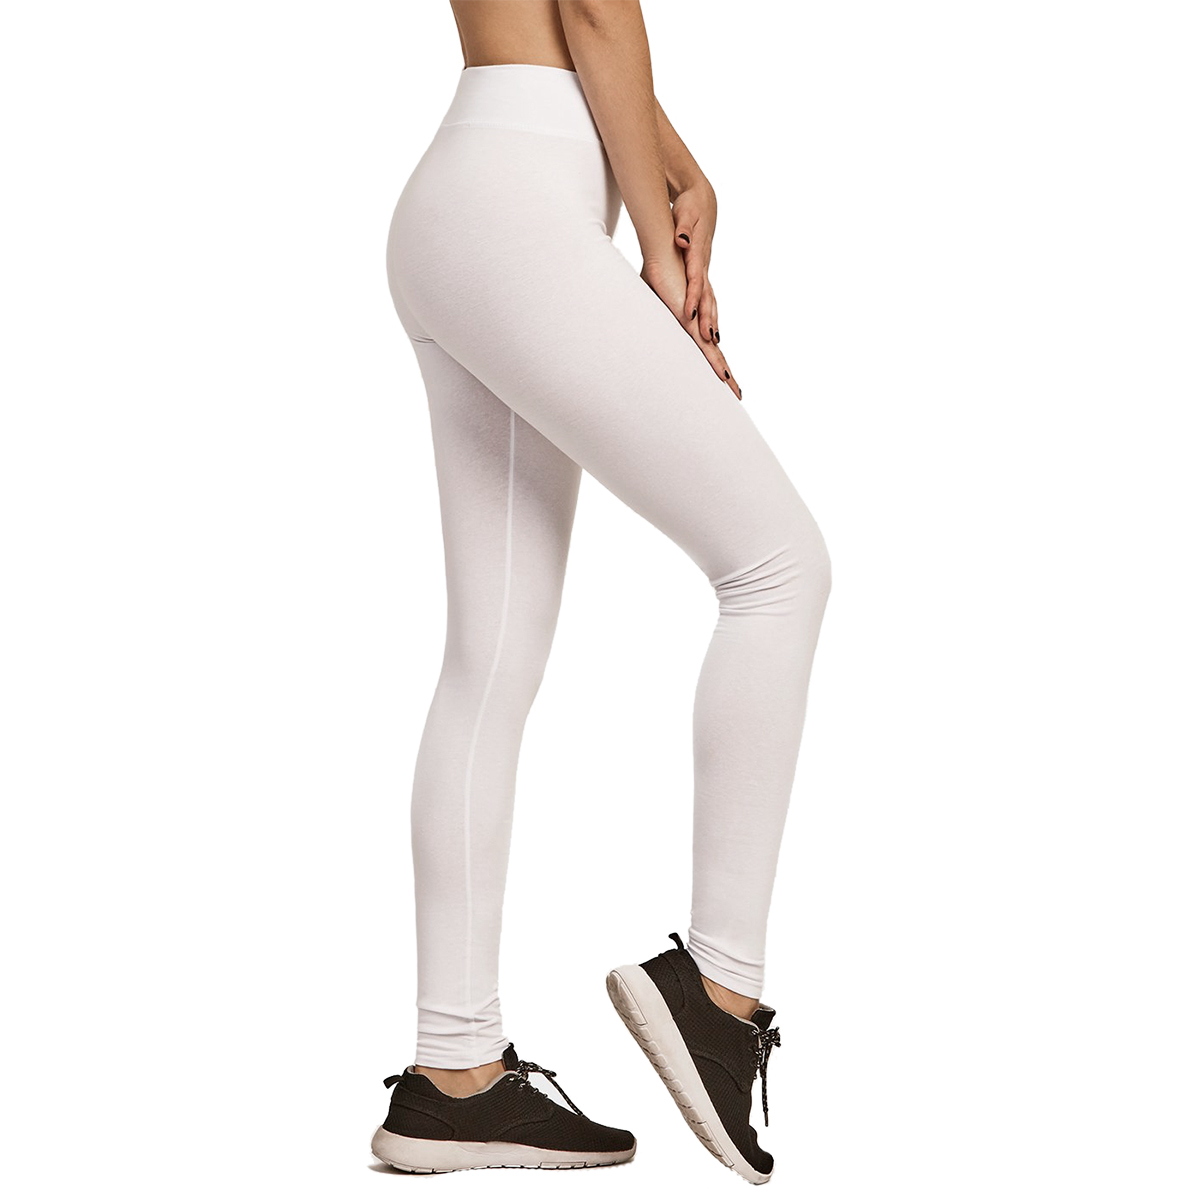 Wholesale Women's Plus Size Leggings in White, 2XL - DollarDays